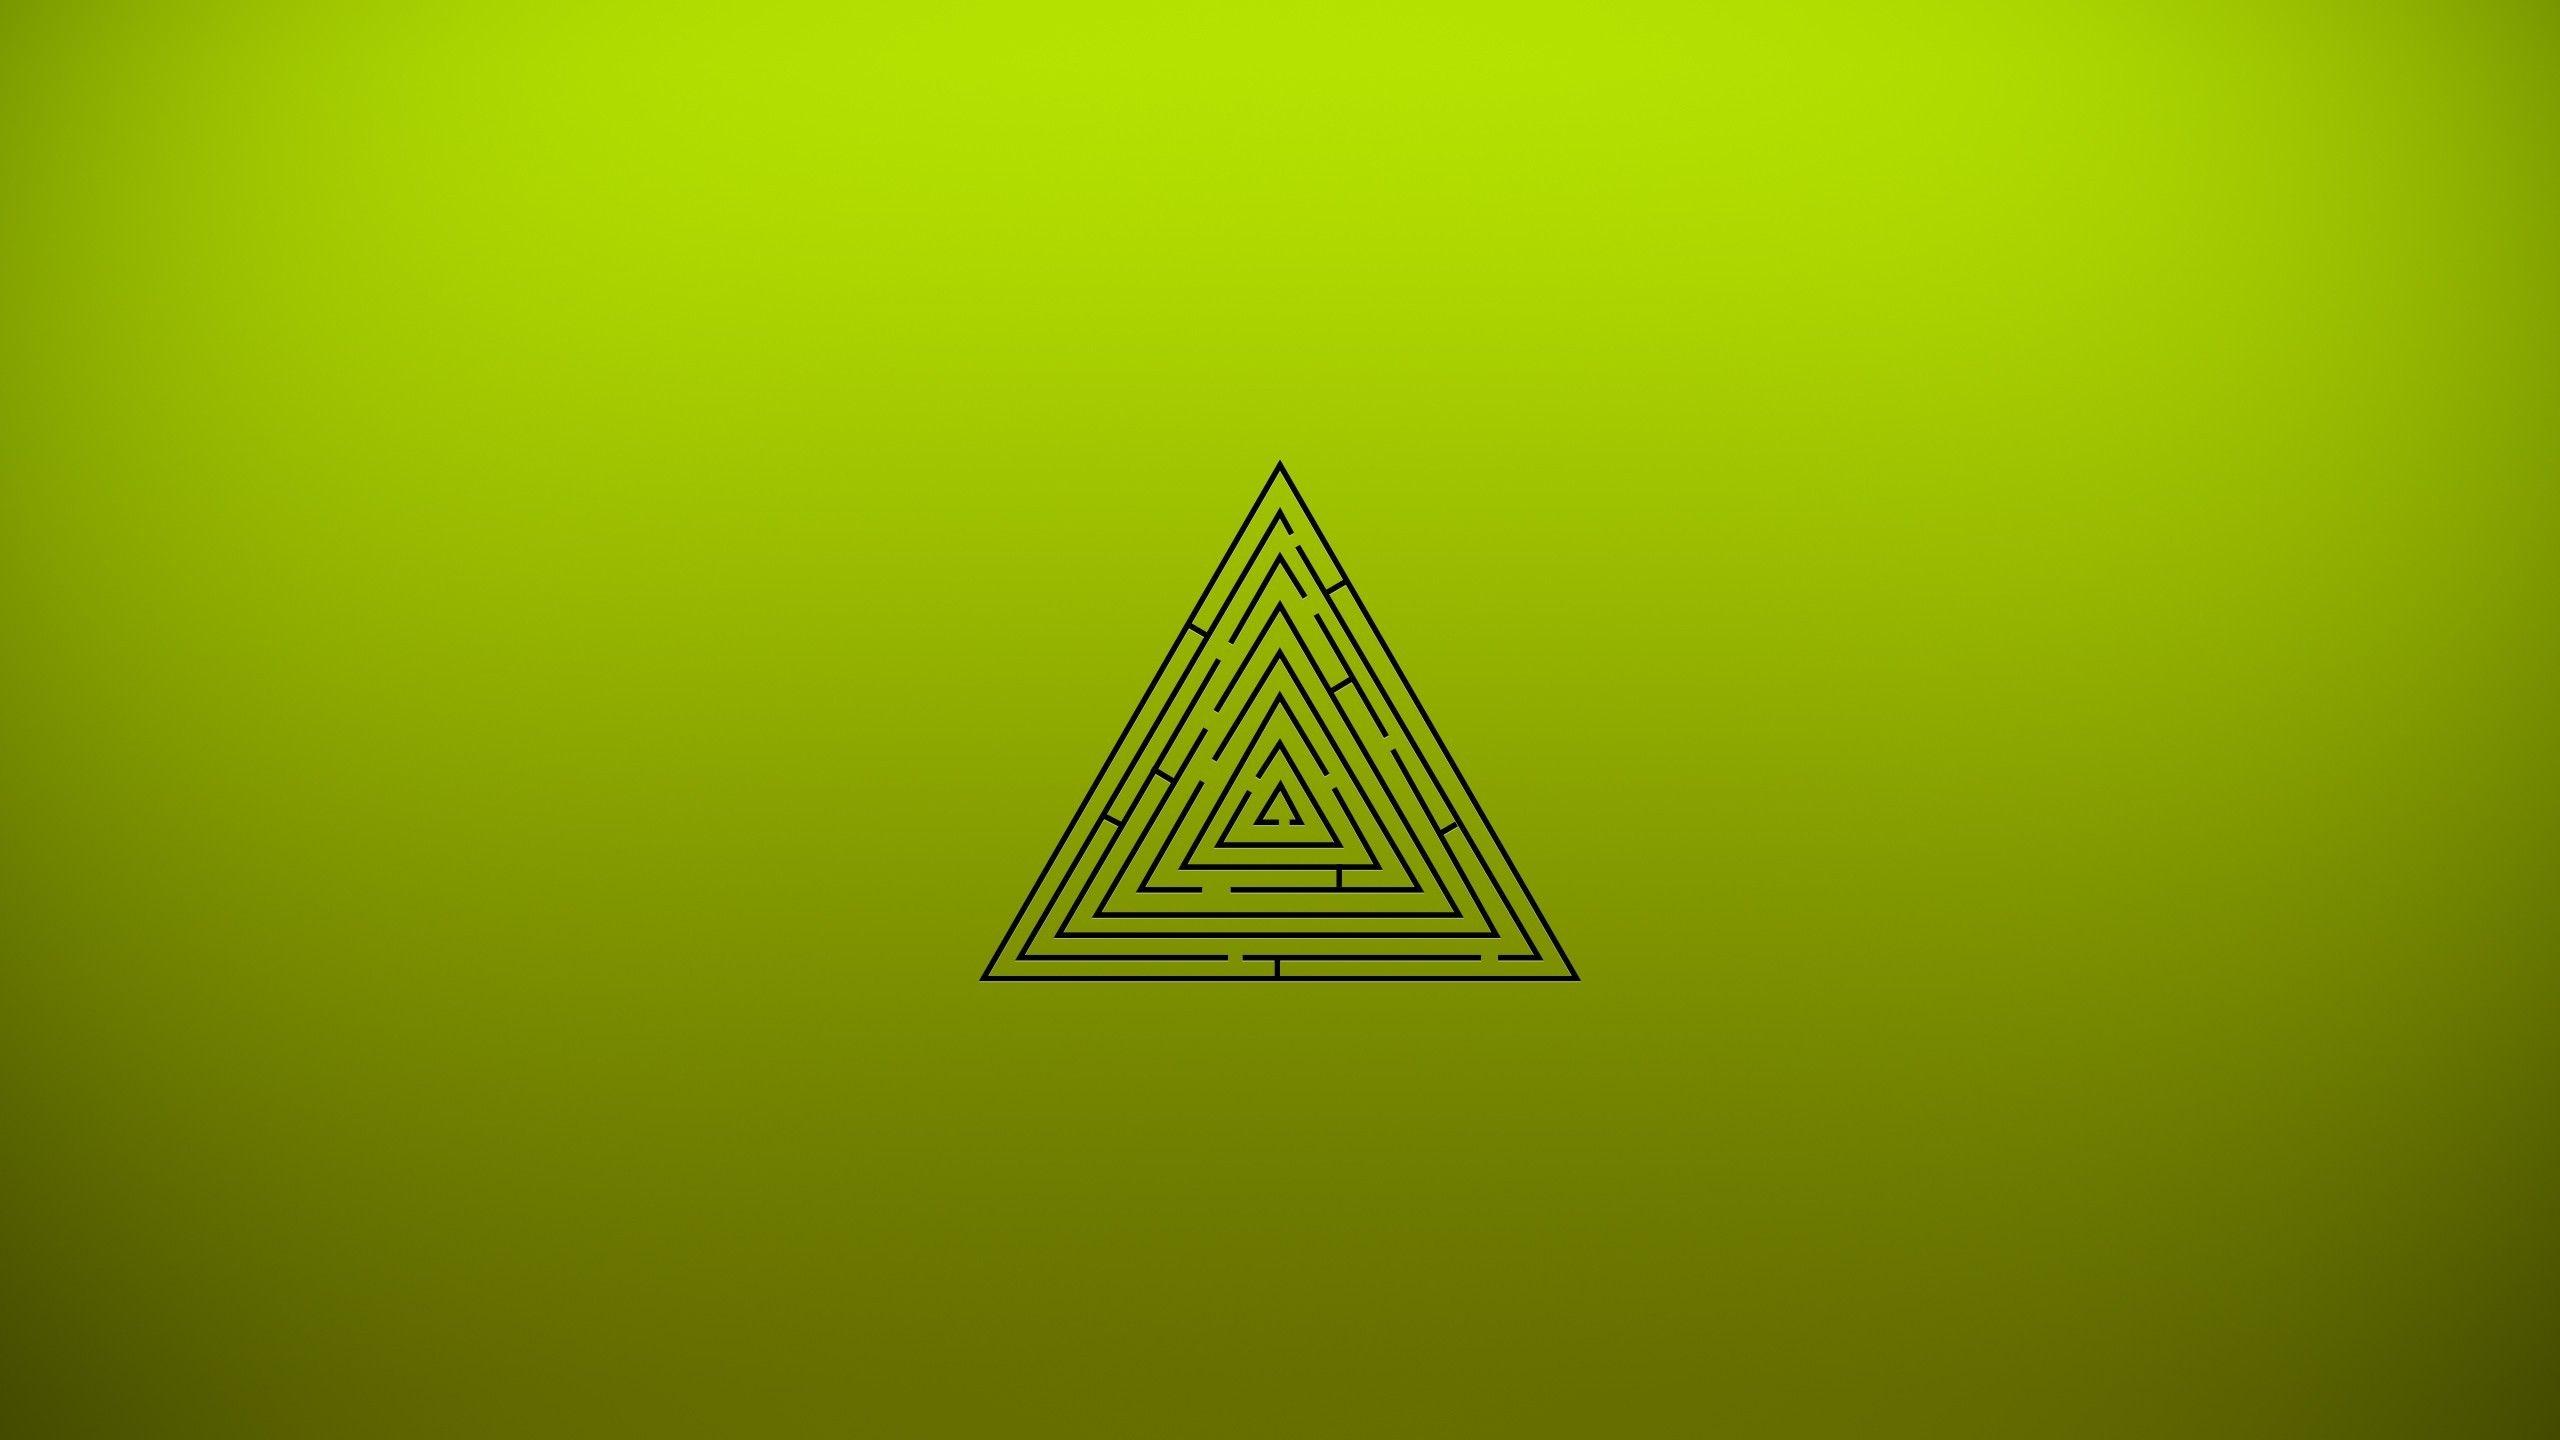 Yellow Triangle with Green Circle Logo - Wallpaper : illustration, text, logo, green, yellow, triangle